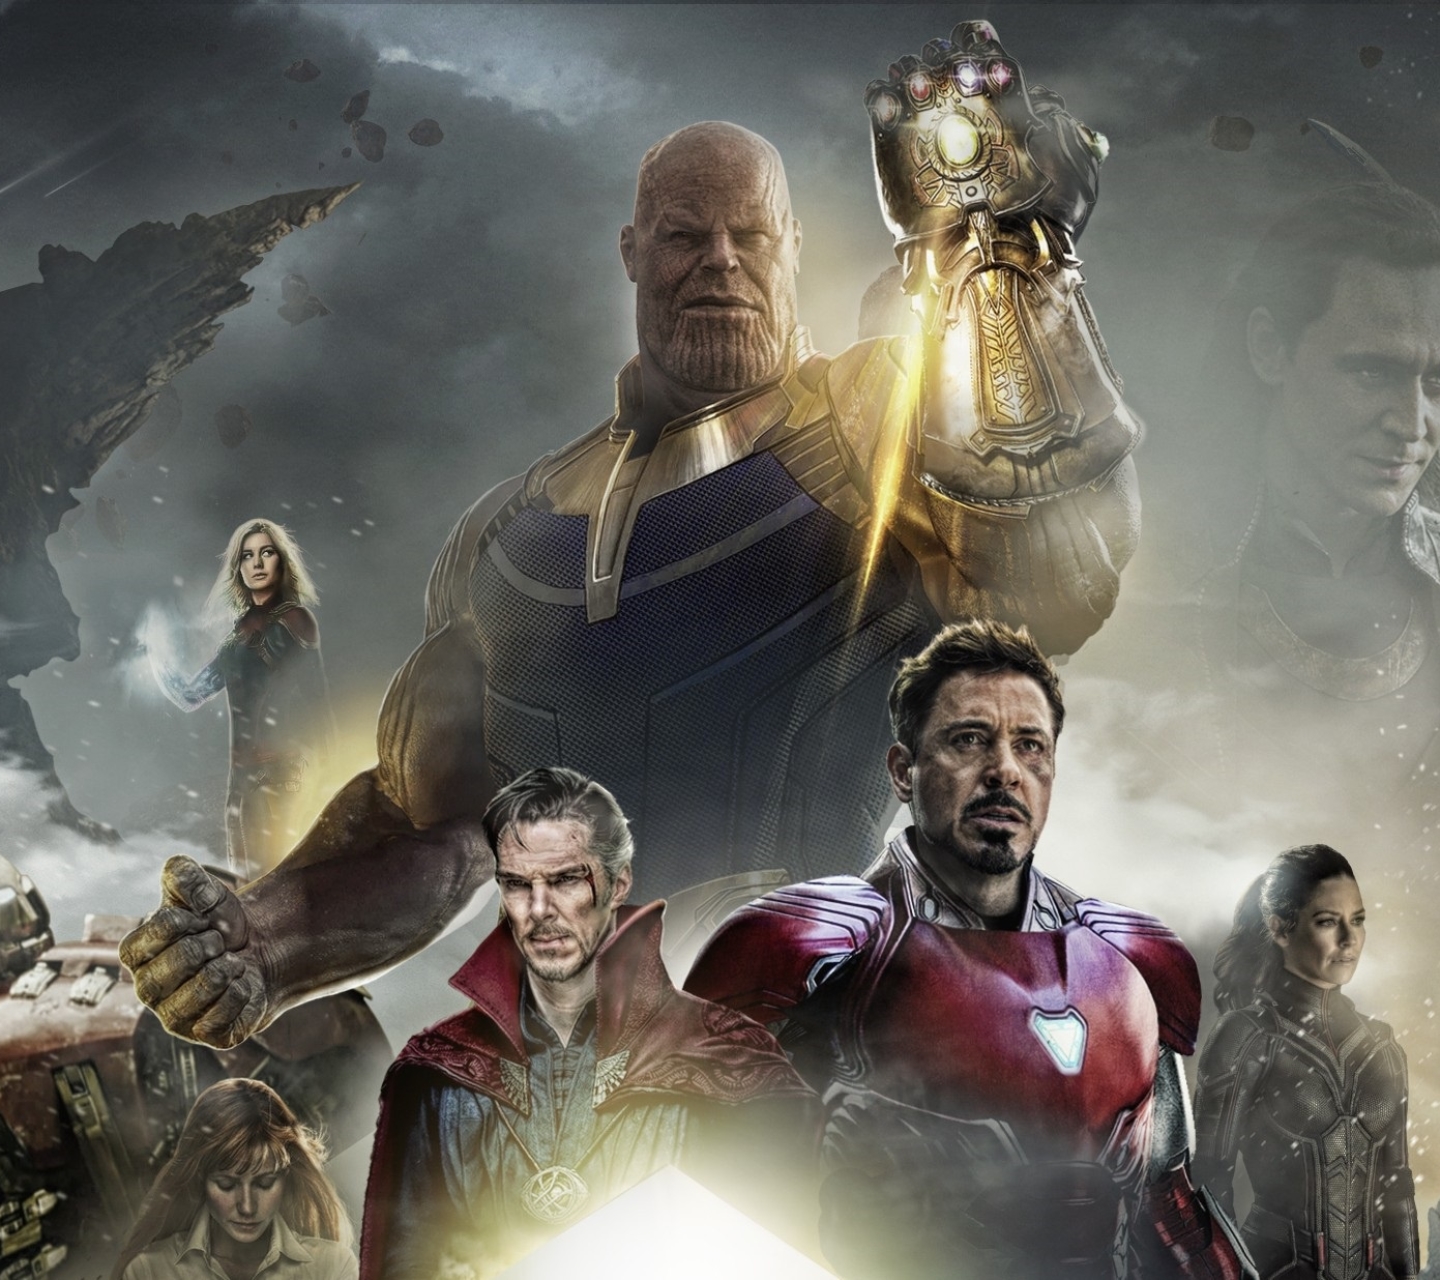 Descarga gratuita de fondo de pantalla para móvil de Los Vengadores, Películas, Hombre De Acero, Doctor Extraño, Loki (Marvel Cómics), Thanos, Hulkbuster, Vengadores: Guerra Infinita.